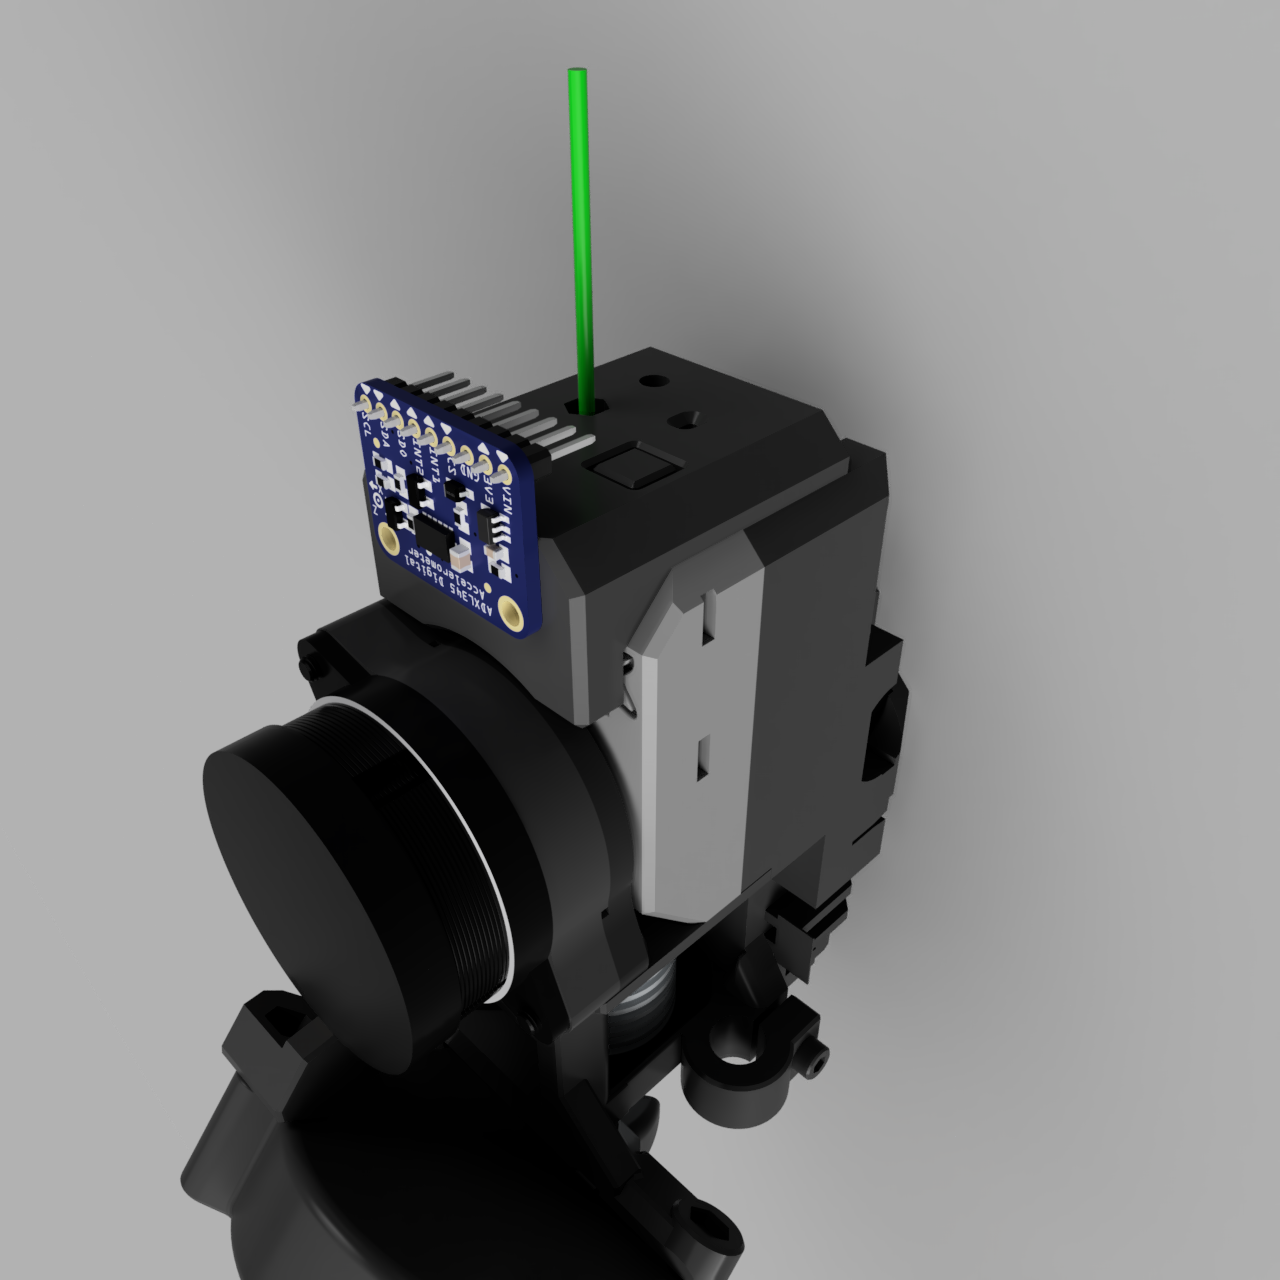 Z'Orbiter filament sensor cover with ADXL345 mount